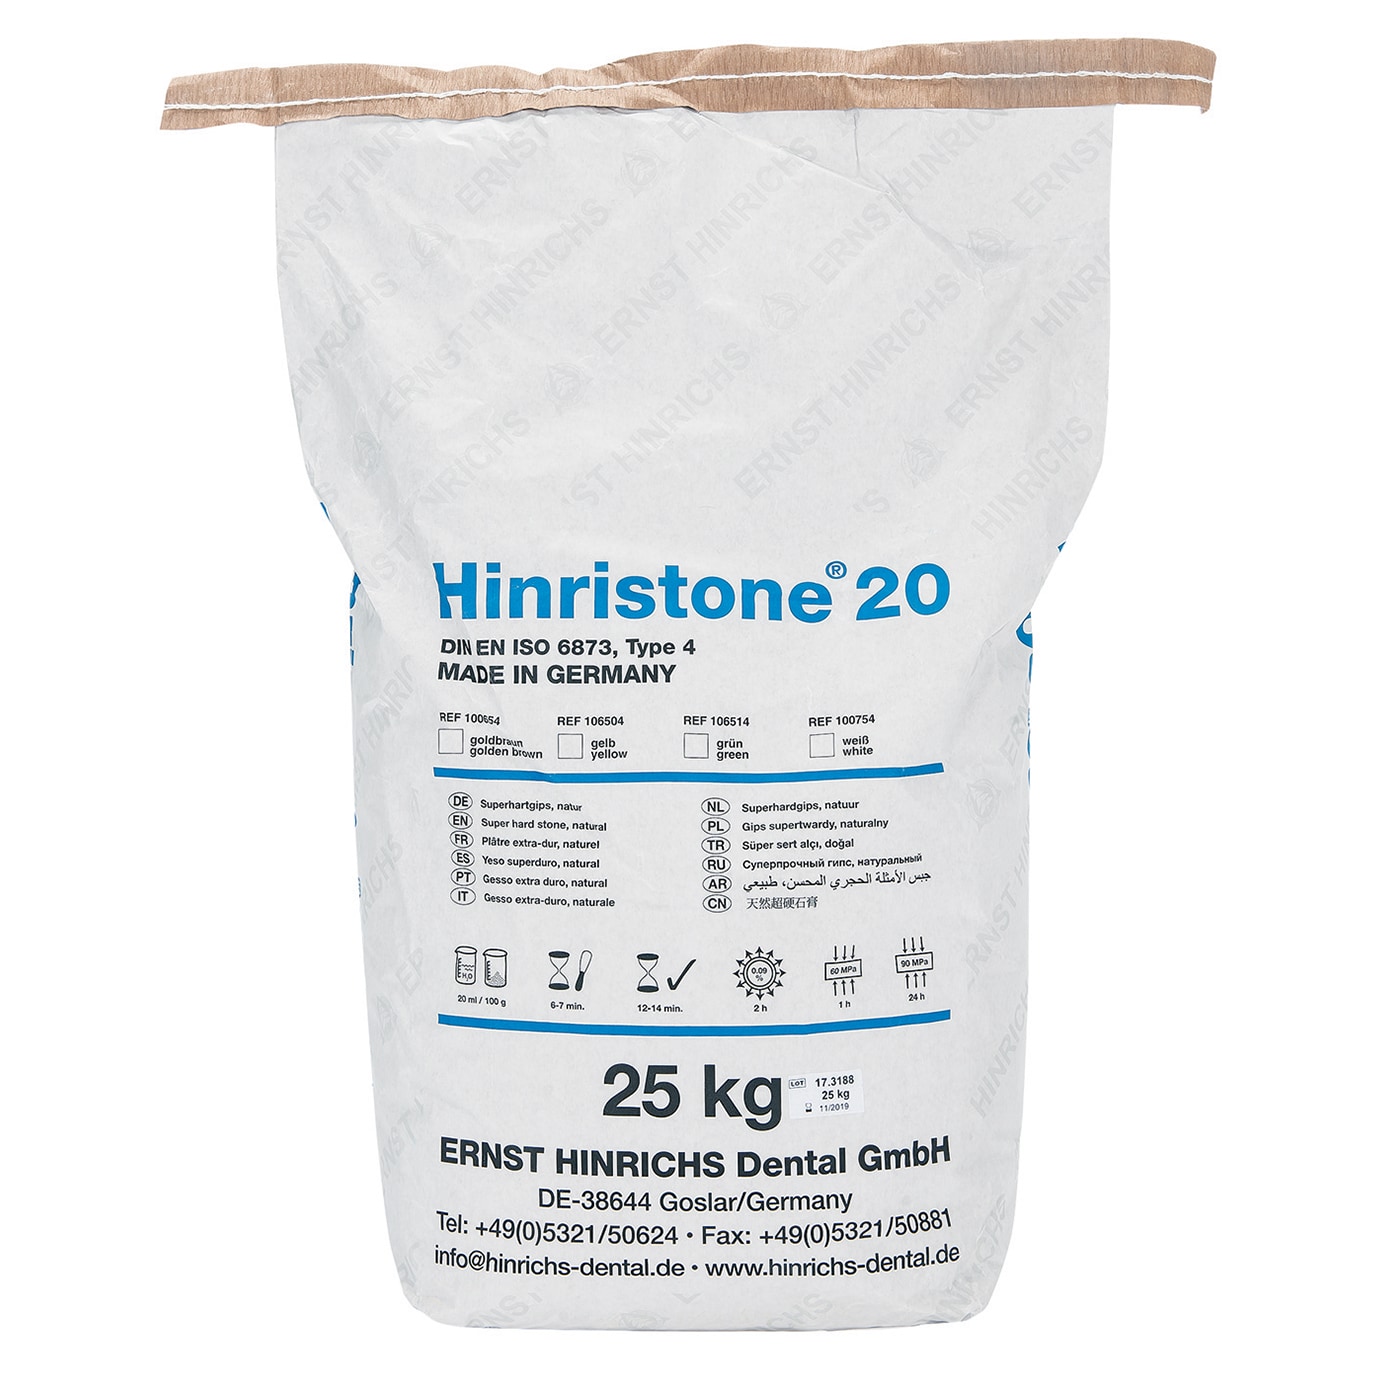 Hinristone 20 goldbrown 25kg